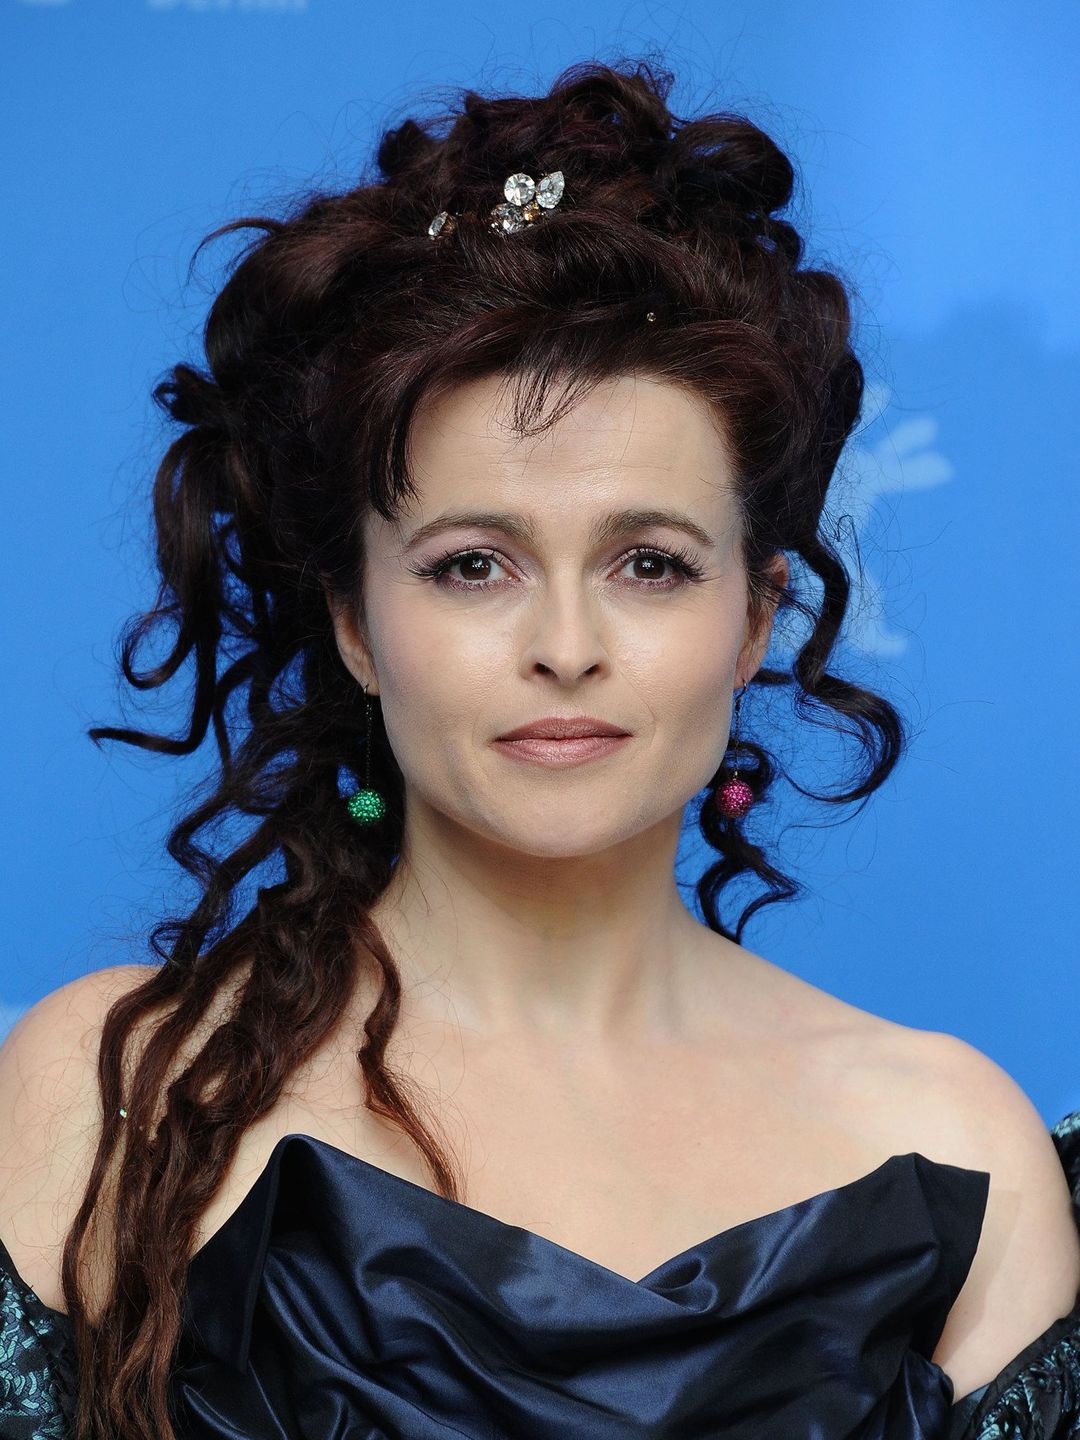 Helena Bonham Carter does she have a husband